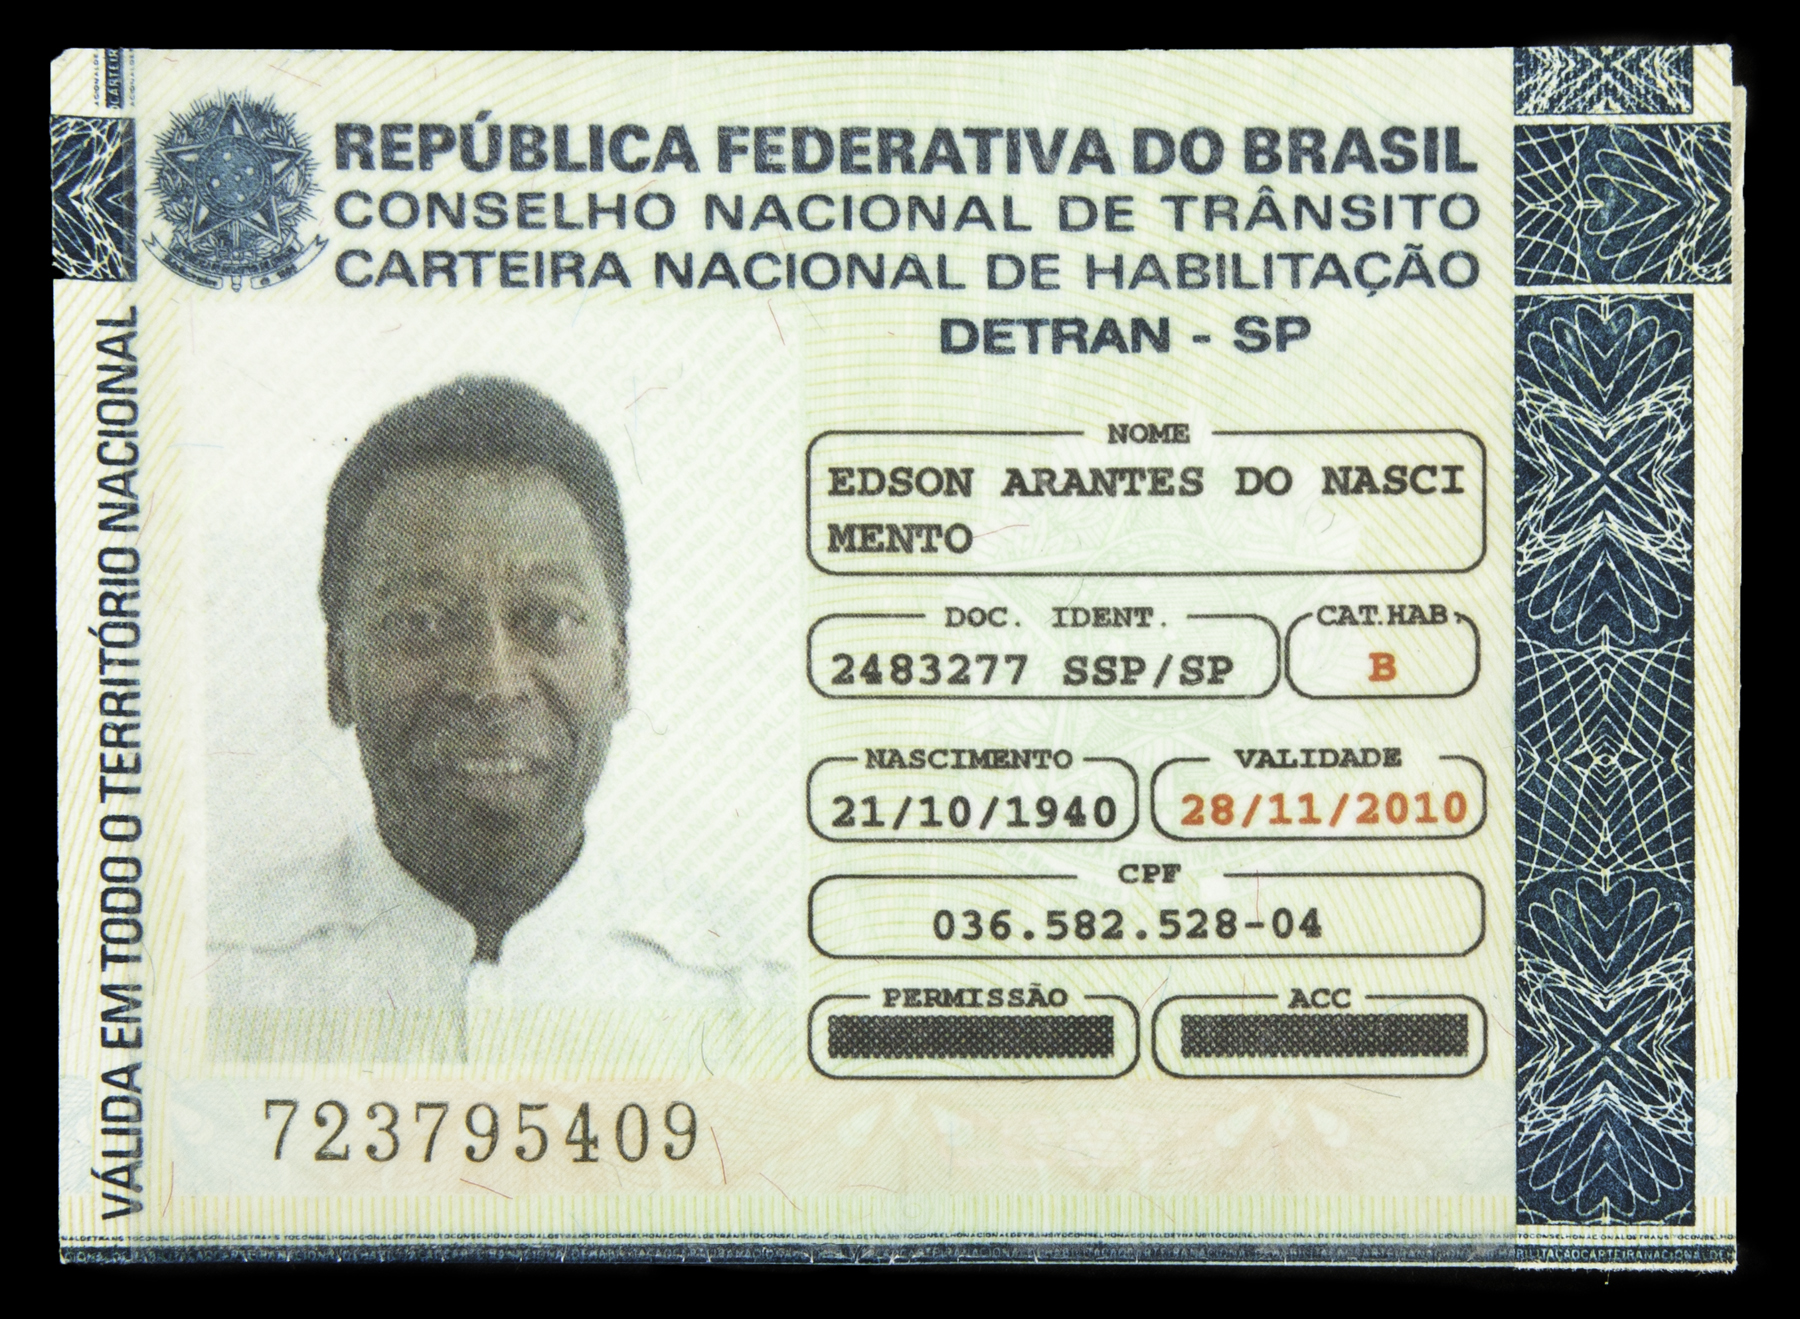 PELÉ 2010 BRAZIL DRIVING LICENSE